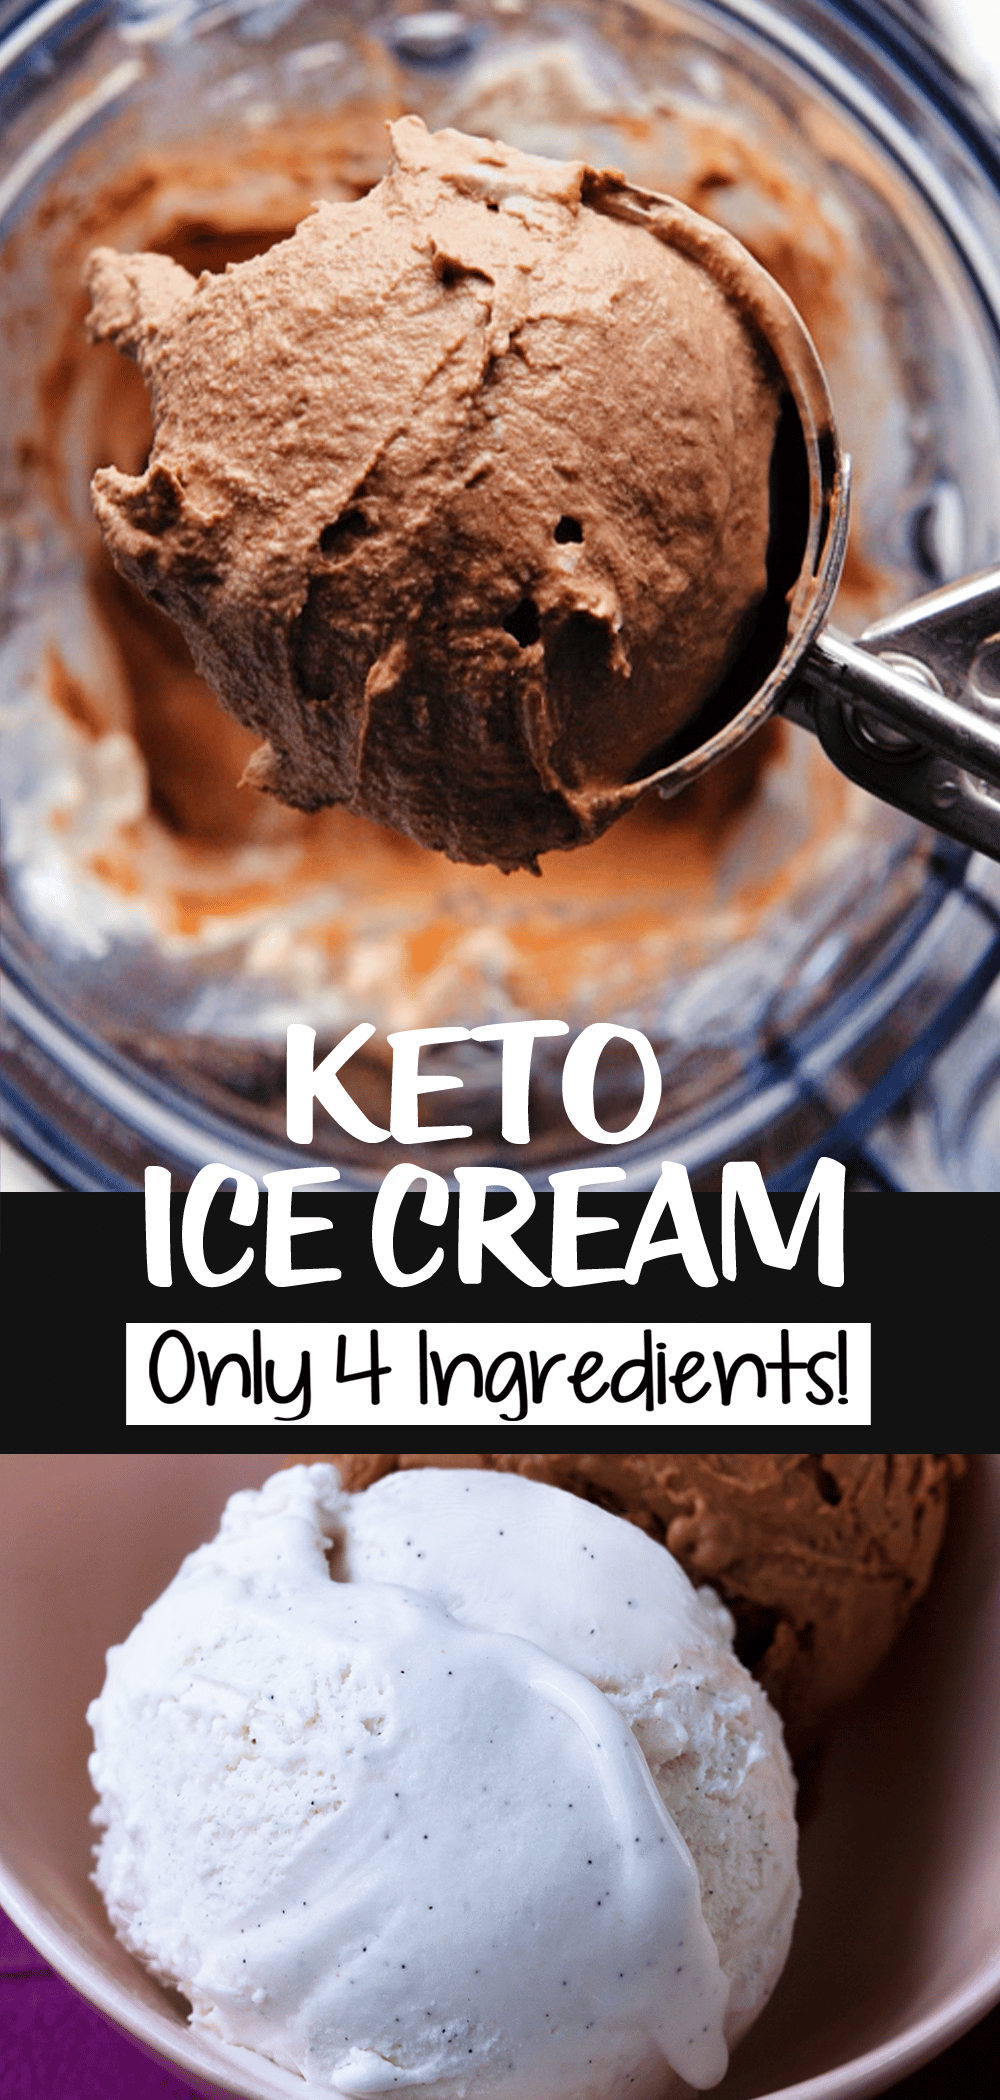 Keto Ice Cream Just 4 Ingredients!